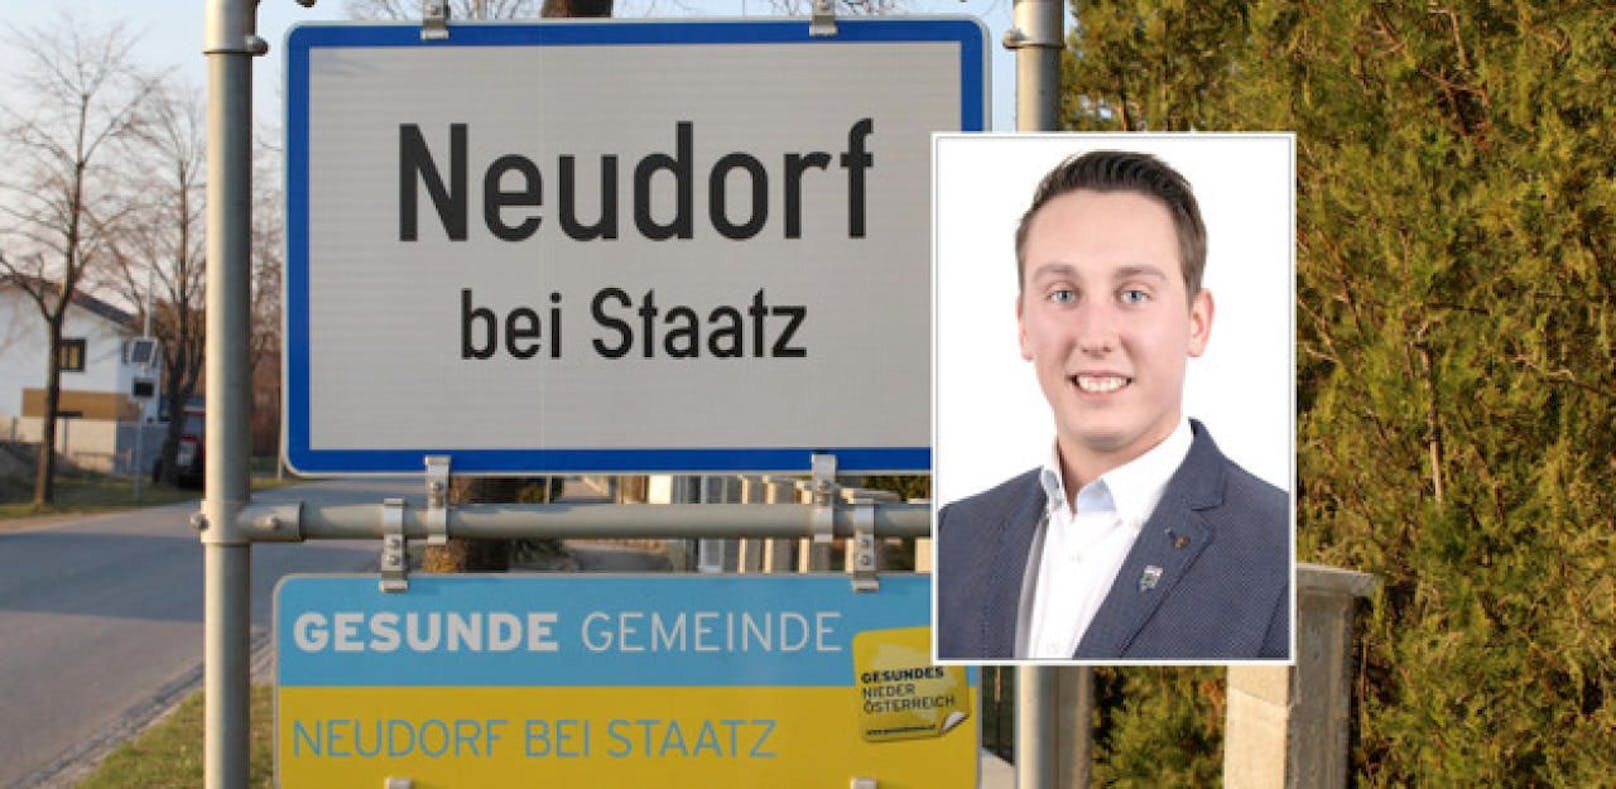 Neudorf bei Staatz: FP über Namensänderung verärgert